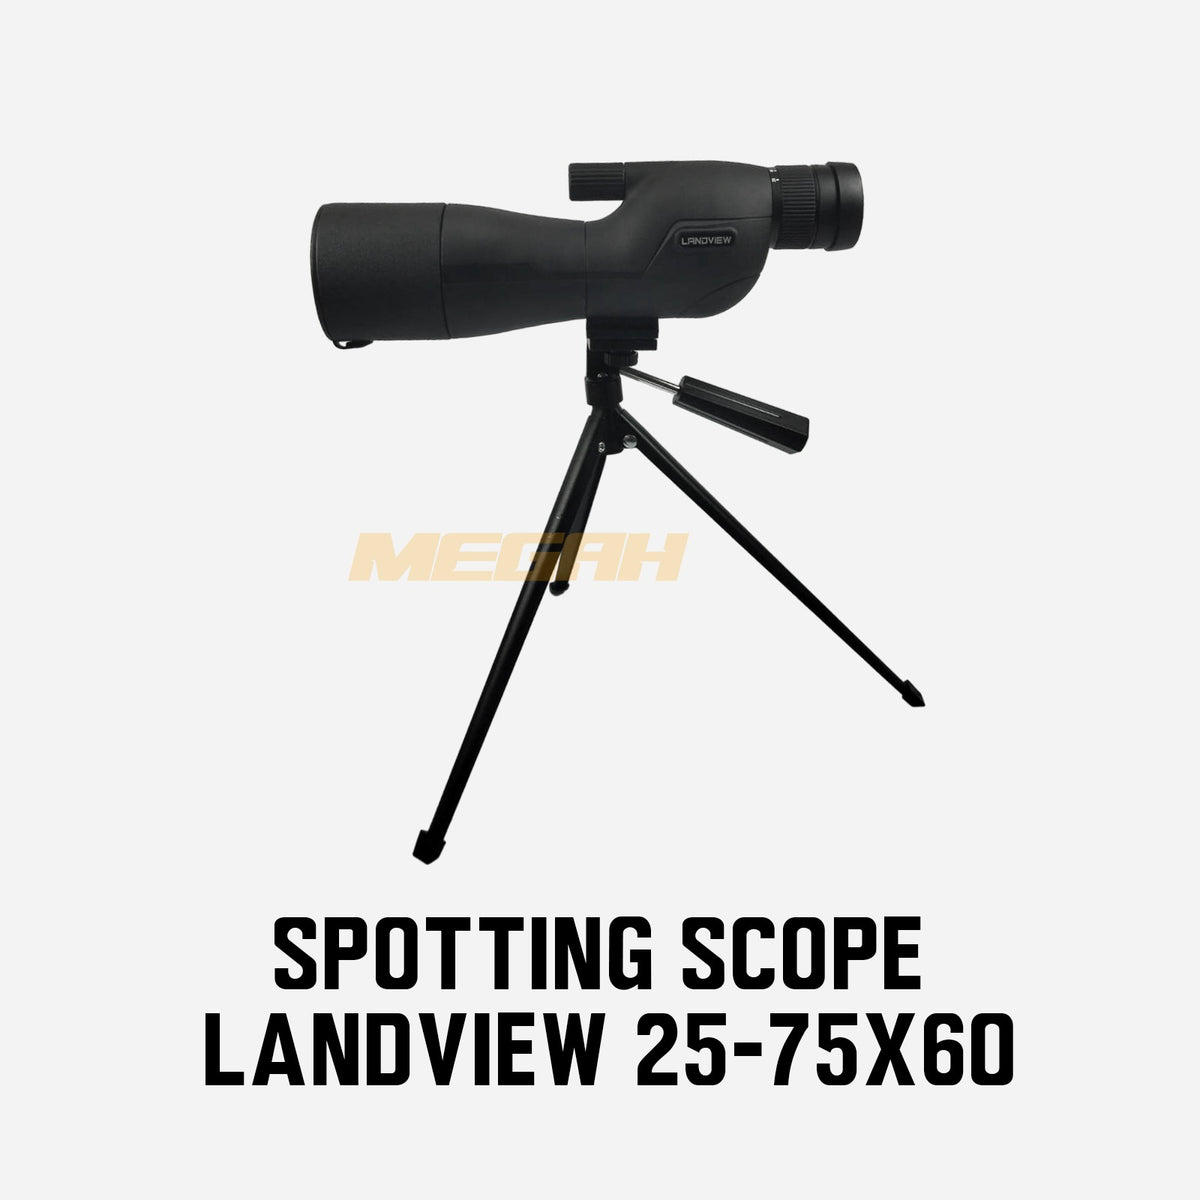 SPOTTING SCOPE LANDVIEW 25-75X60